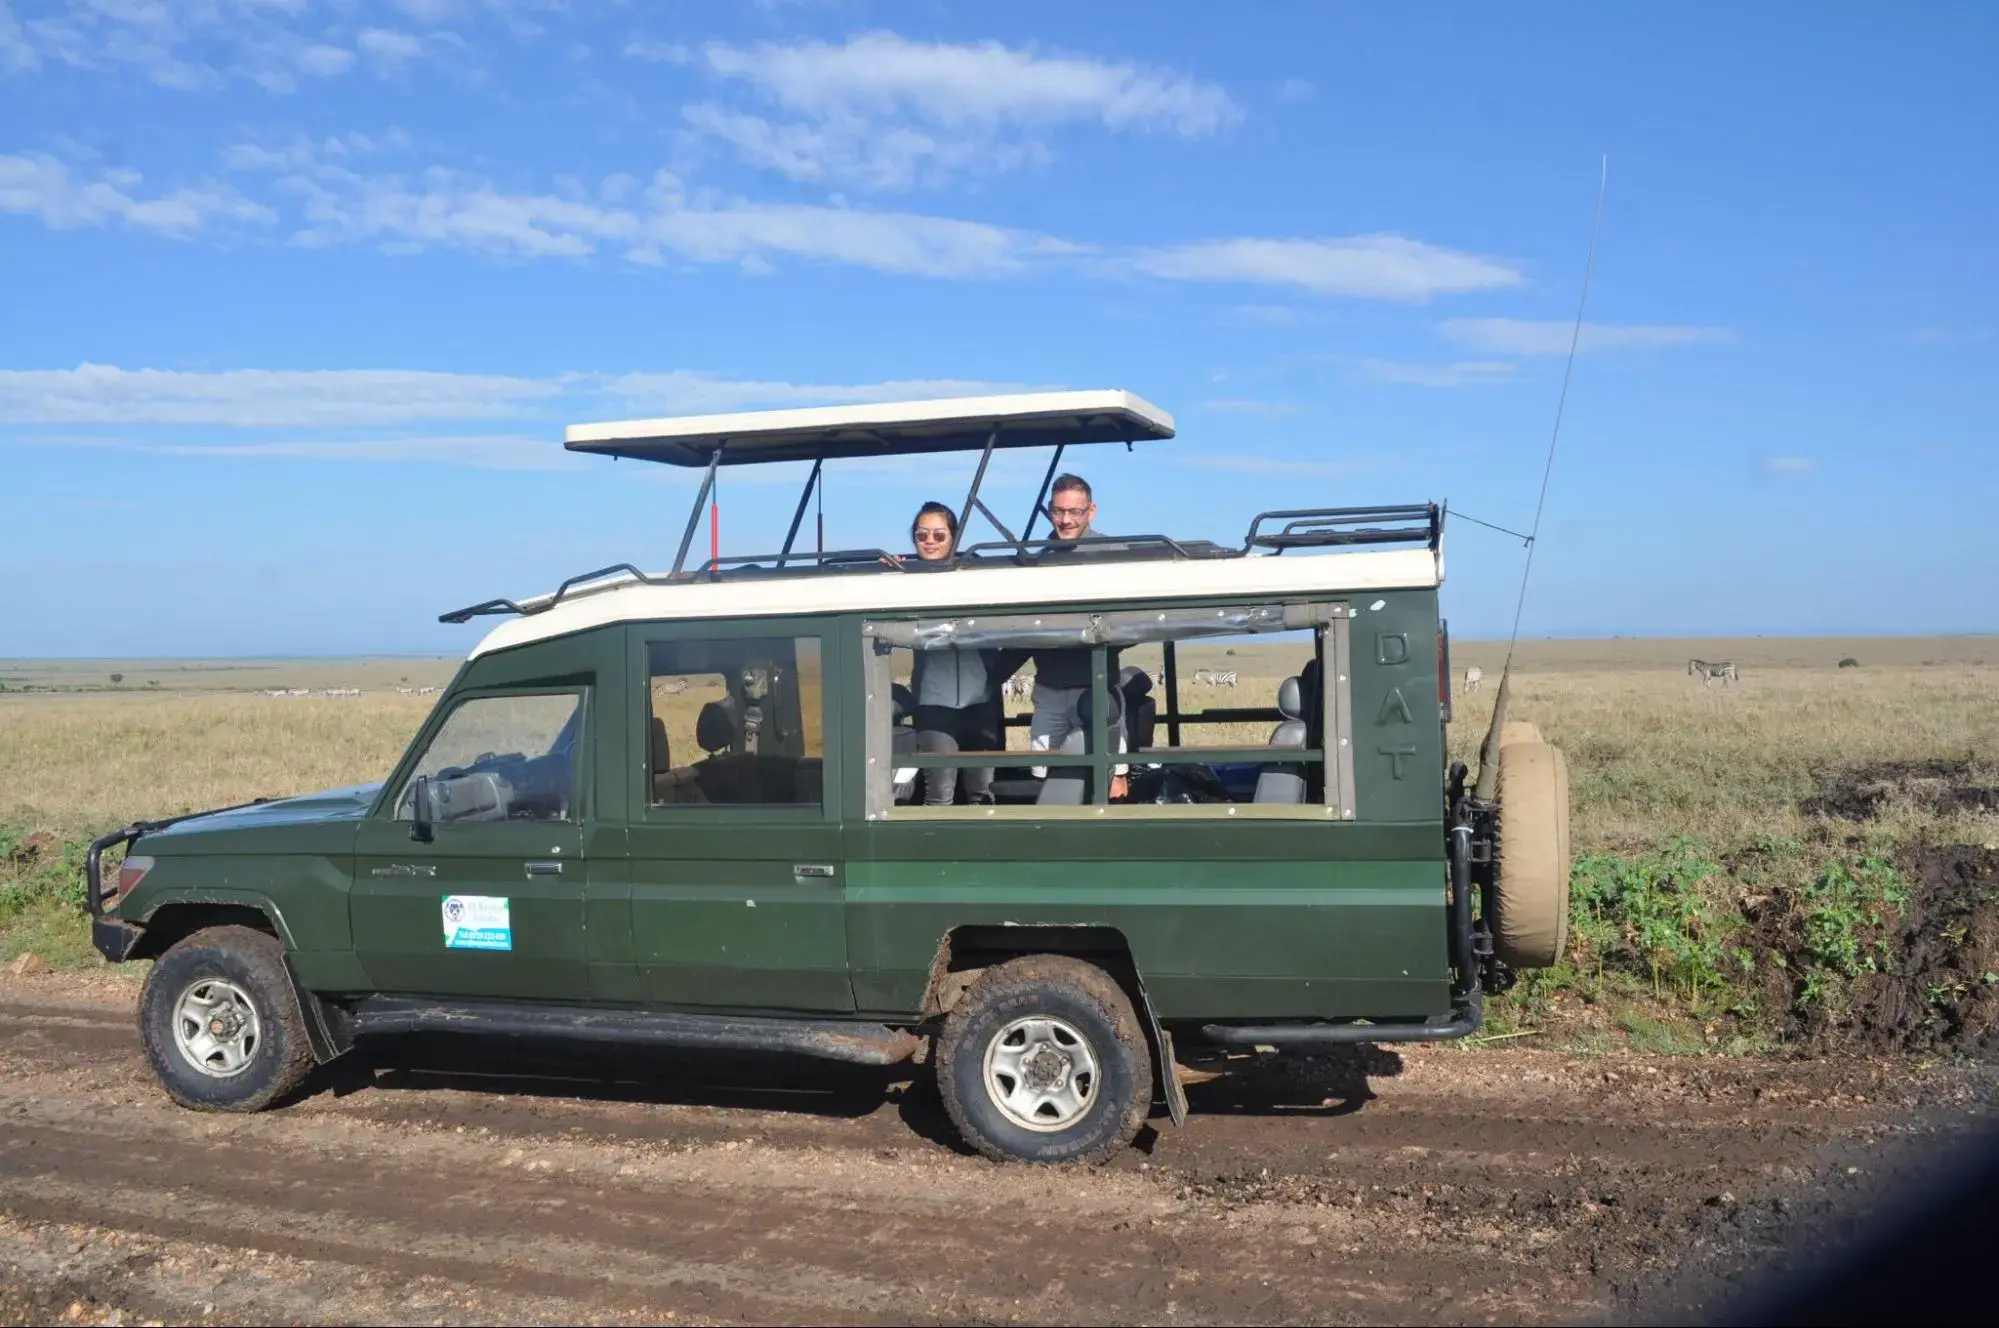 Masai Mara best time to visit - Open wildlife viewing in Masai Mara